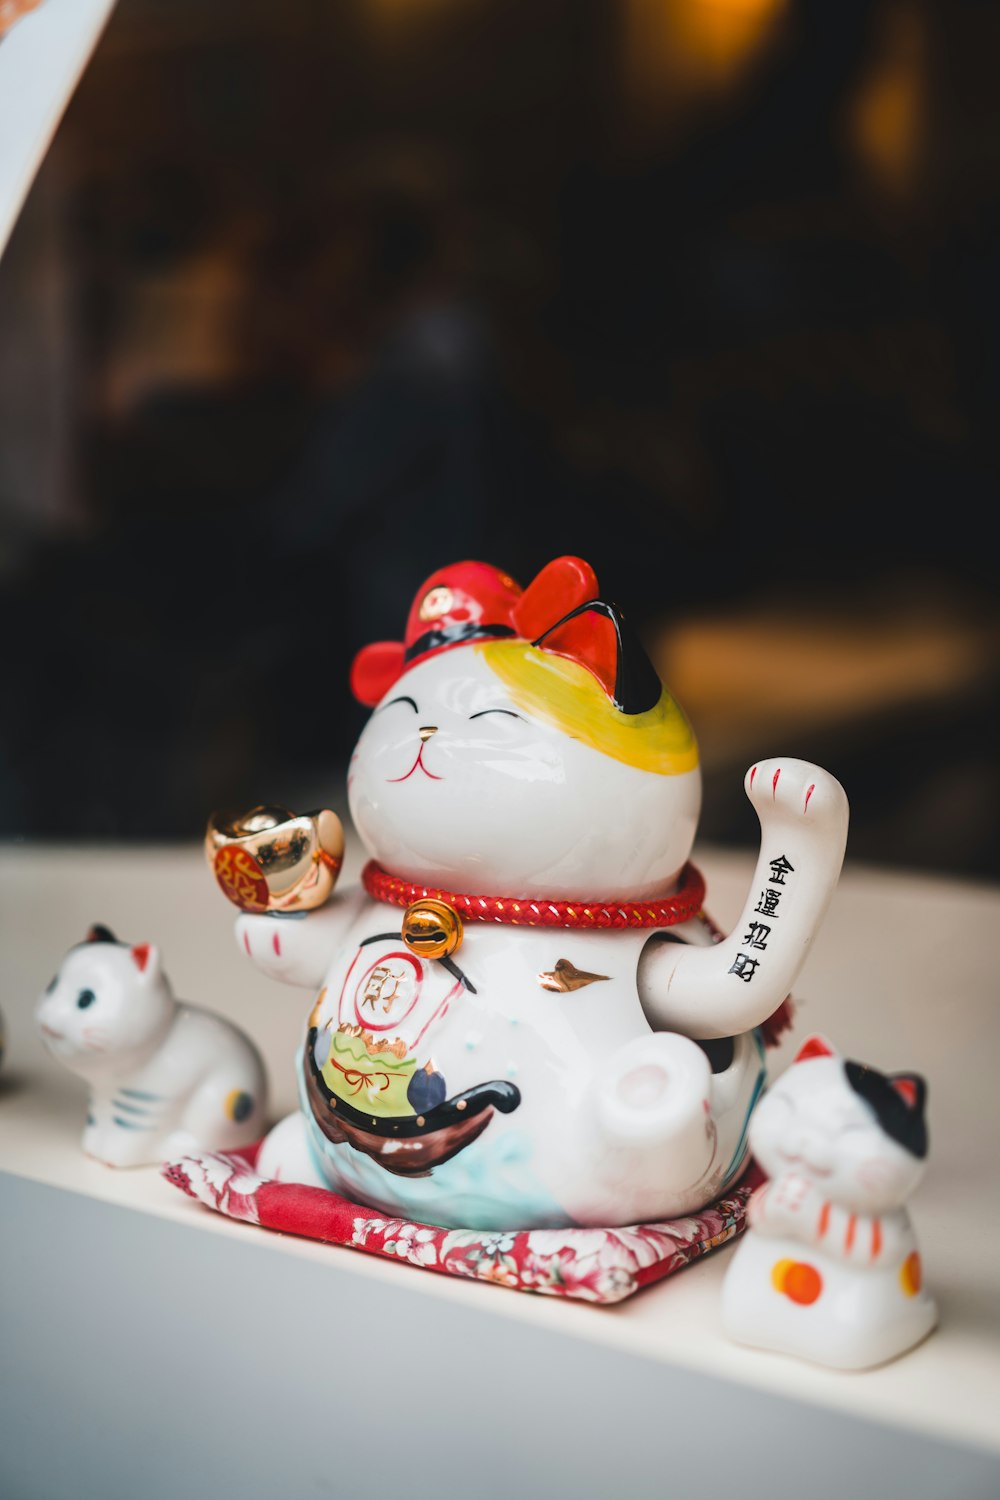 white and red ceramic cat figurines